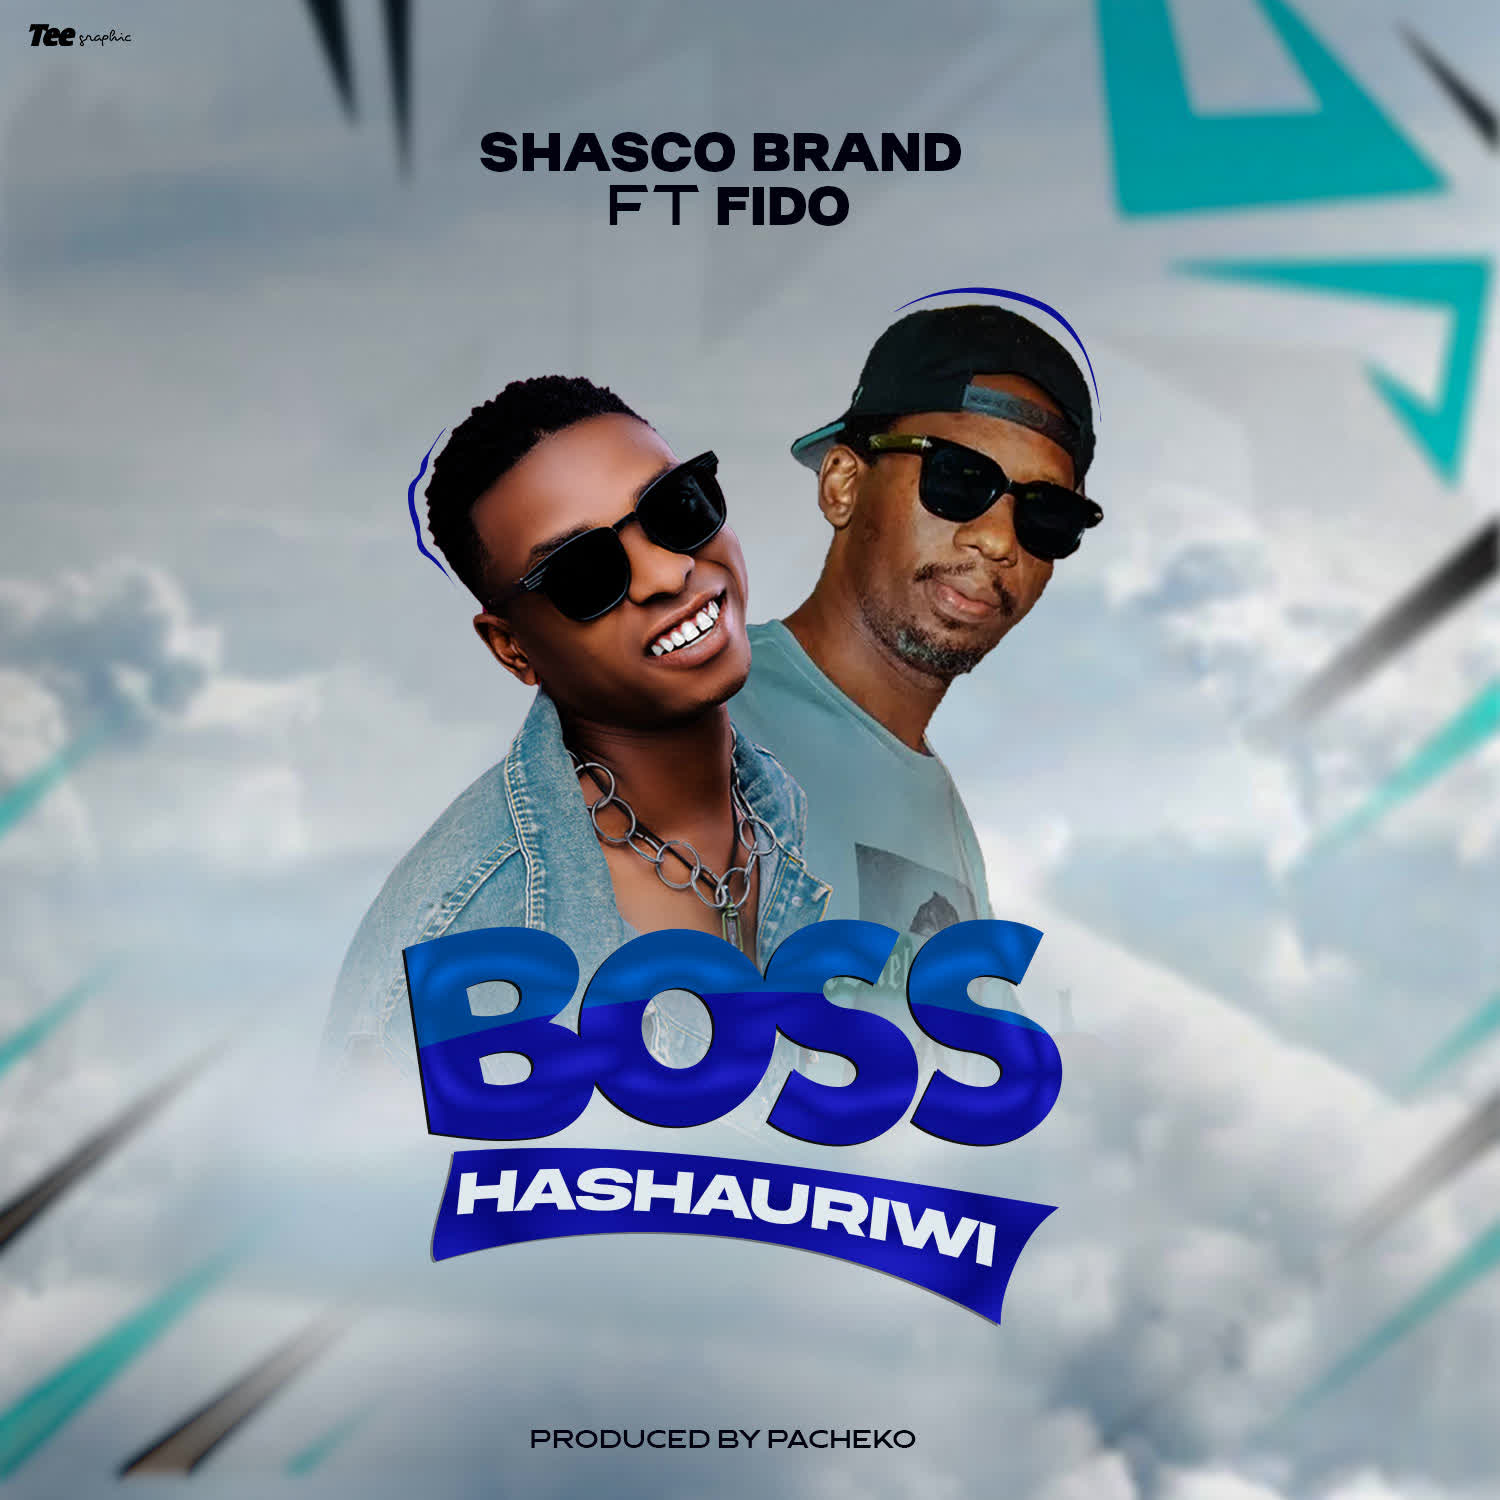  Shasco Brand Ft. Fido Mgaigai – Boss Hashauriwi